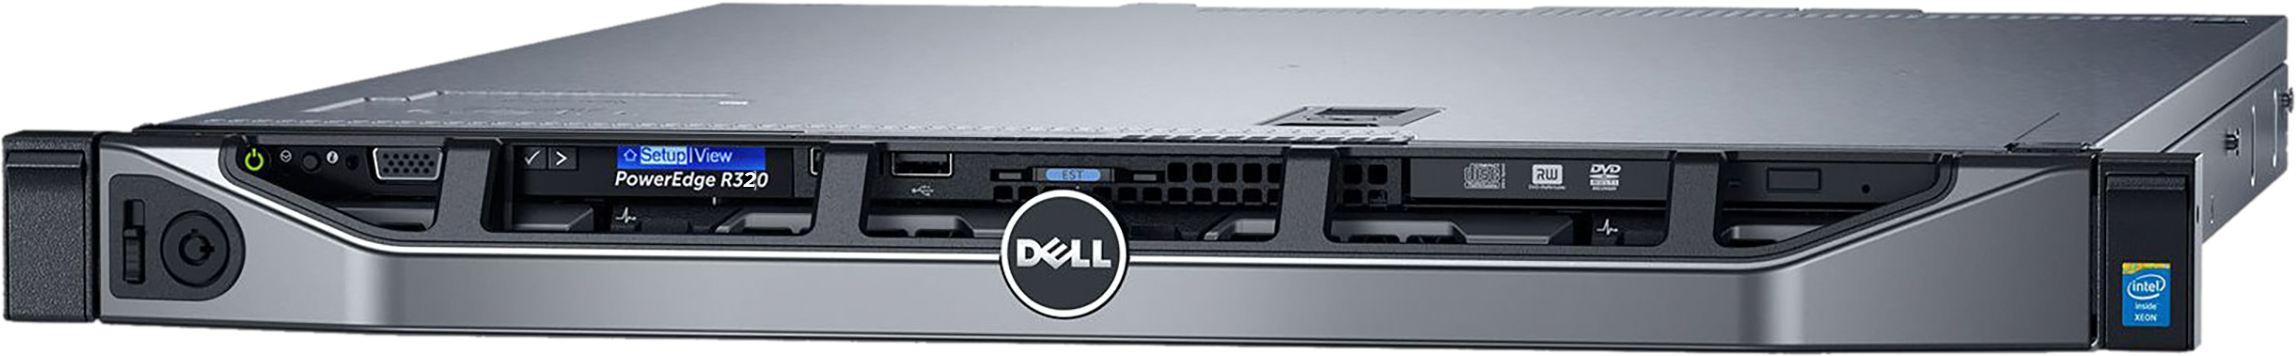 Аренда физического сервера DELL R320 / E5-2450 v2 / 32 GB RAM / 4 x 8 TB HDD / H310